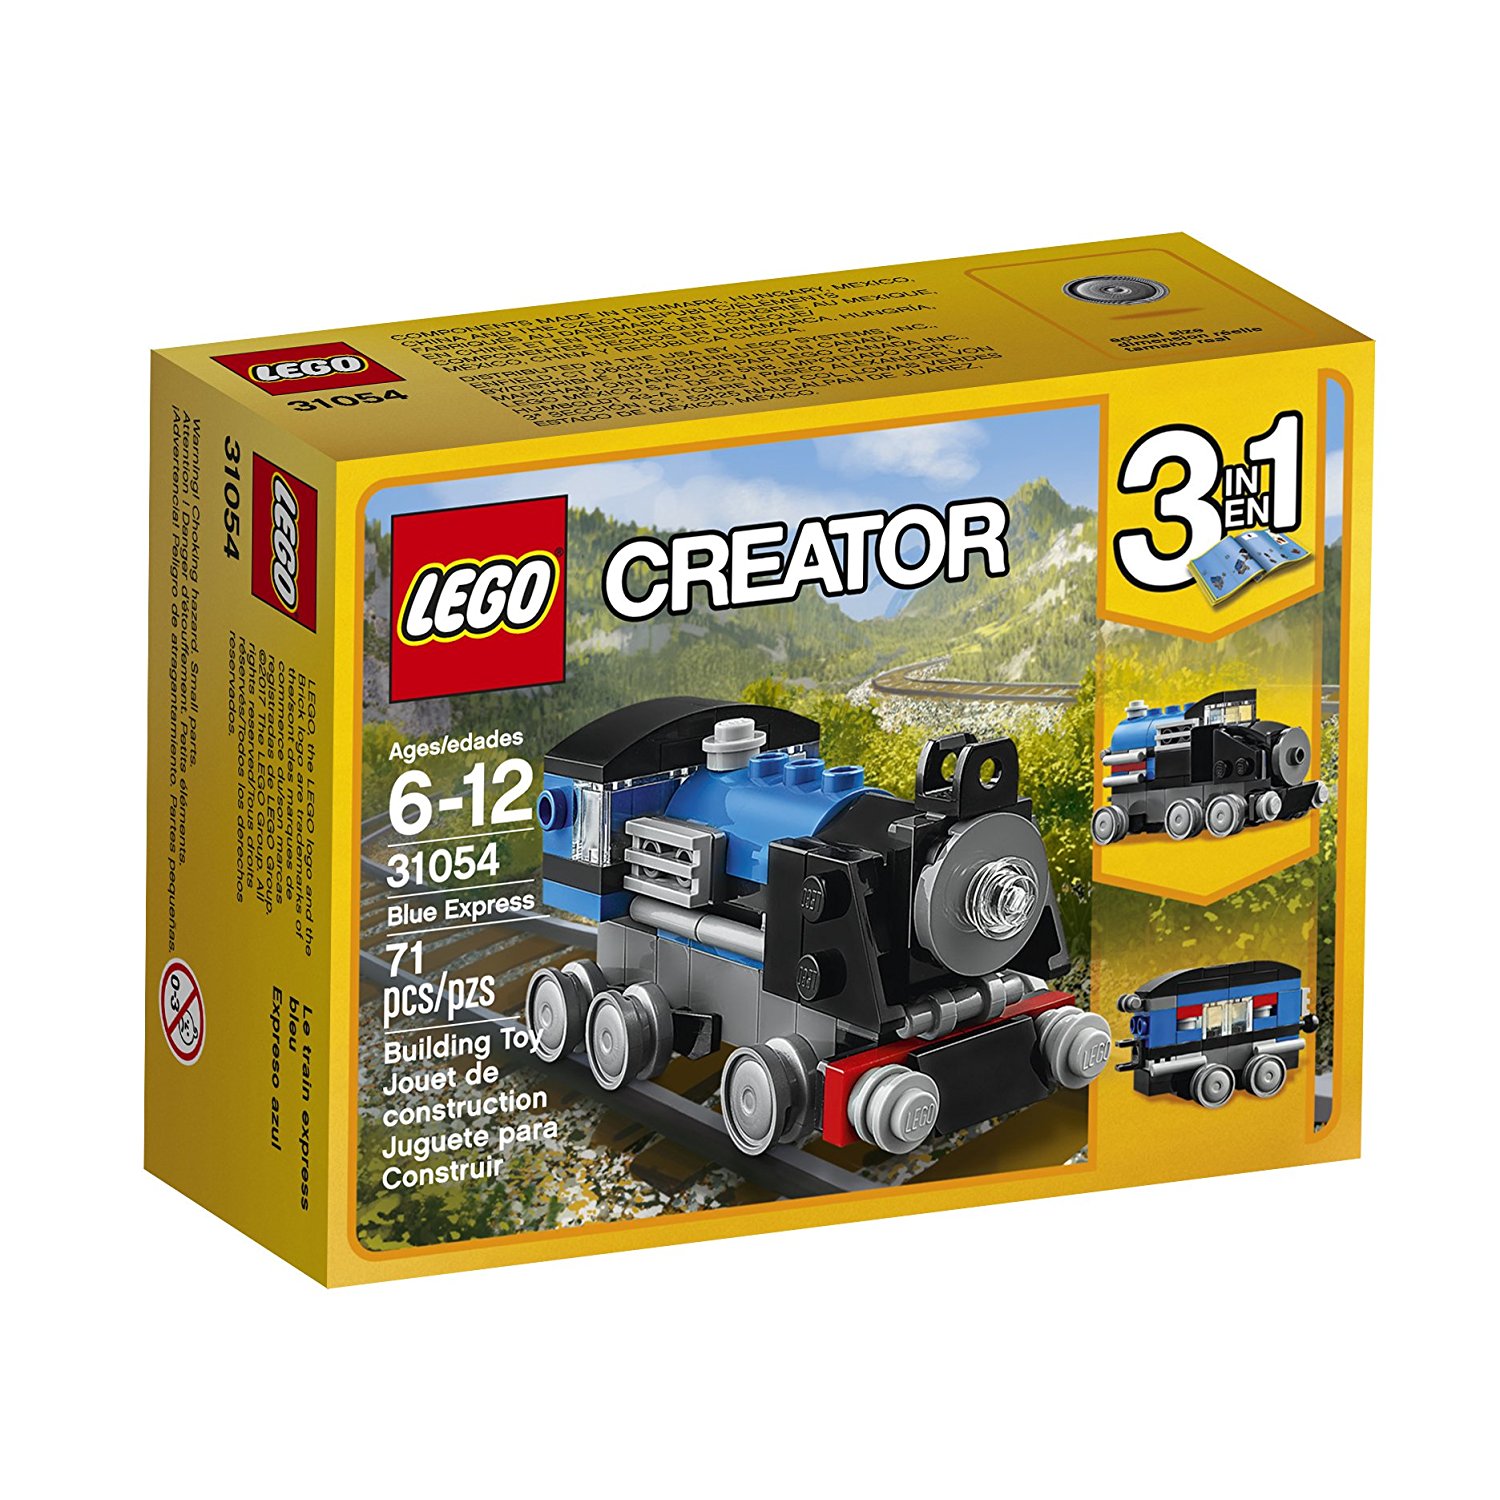 LEGO Creator Blue Express 31054 Building Kit – Just $4.93!